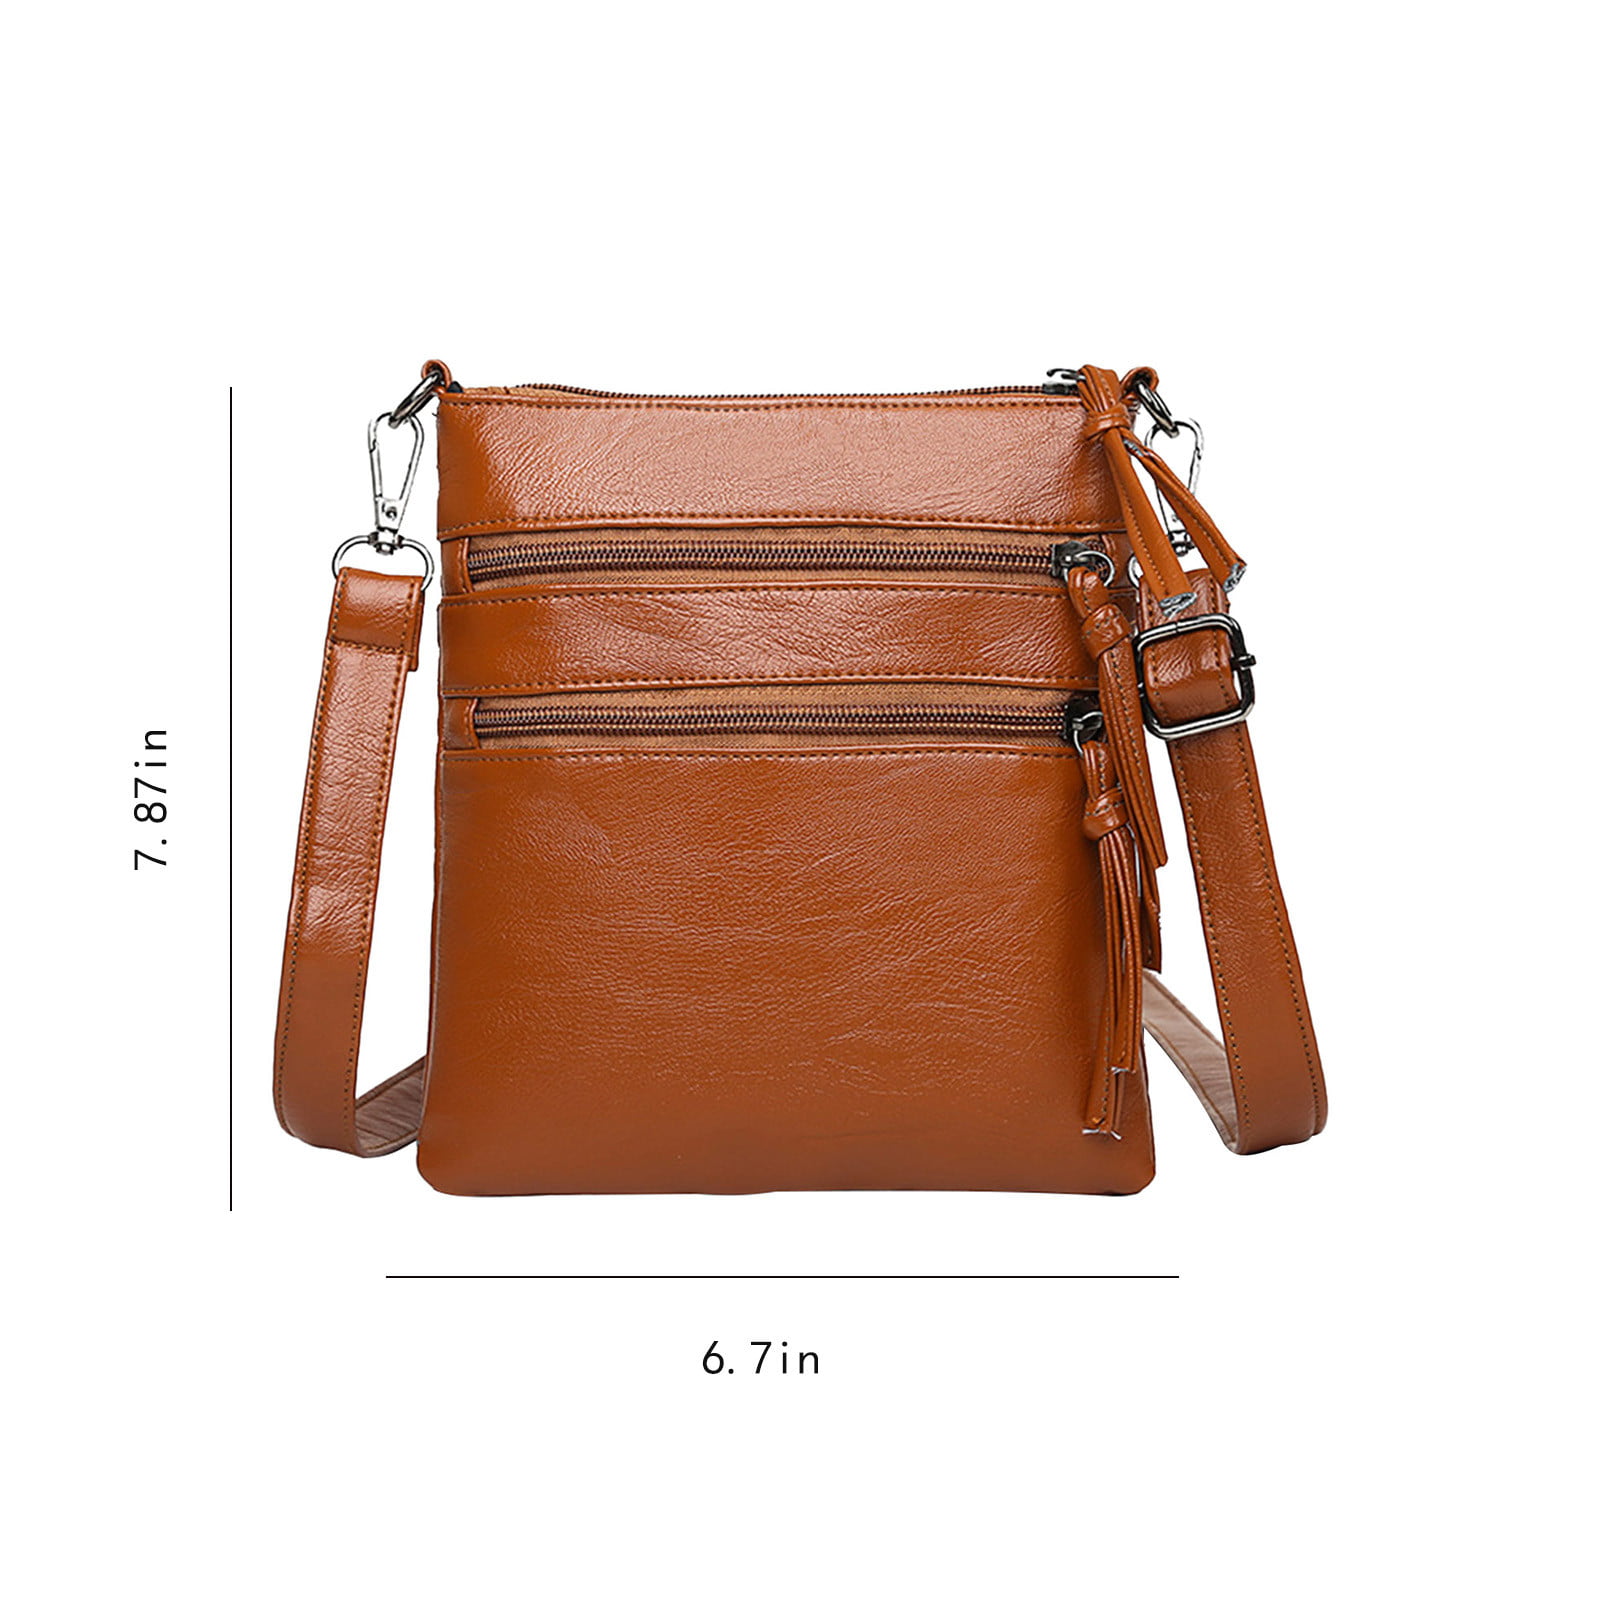  Wento 1pcs 43''-49'' Dark Brown Faux Leather Straps Adjustable  Bag Strap,Soft Vinyl Leather Shoulder Straps,Replacement Cross Body Purse  Straps,Handbag Bag Wallet Straps (Gold)… : Clothing, Shoes & Jewelry